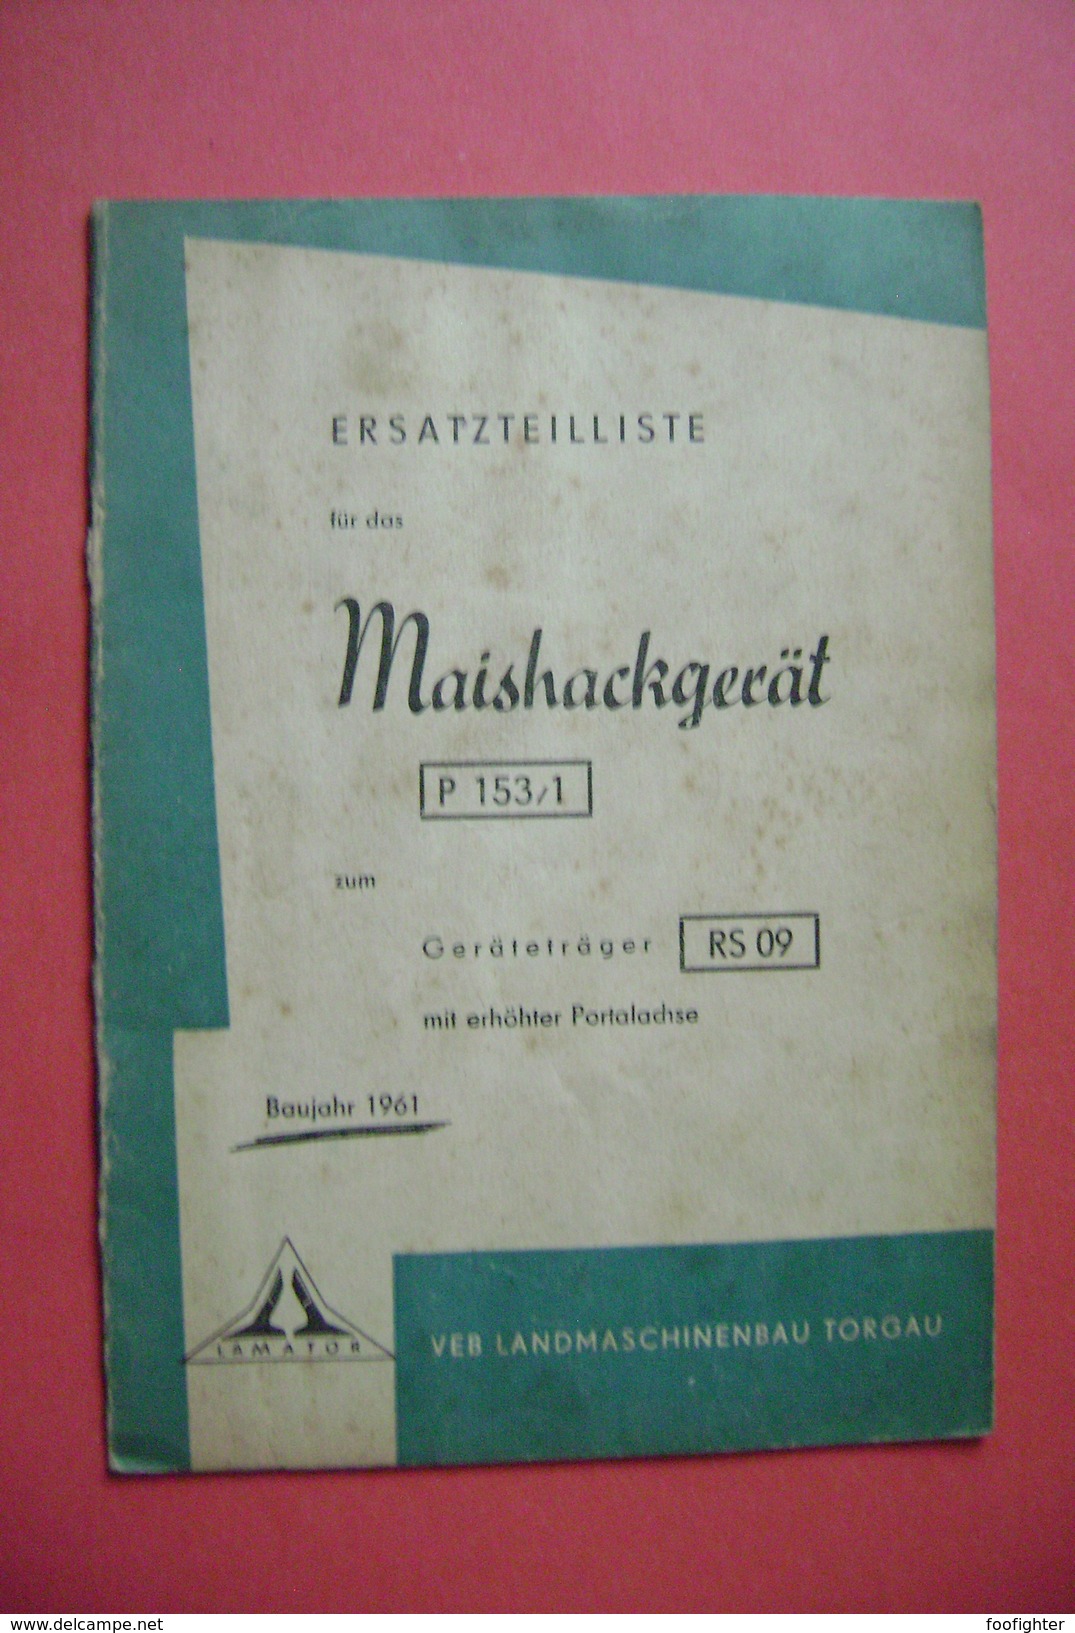 Ersatzteiliste Für Das MAISHACKGERÄT P 153/1 Zum Geräteträger RS 09 - VEB Landmaschinenbau Torgau DDR 1961 - Catálogos